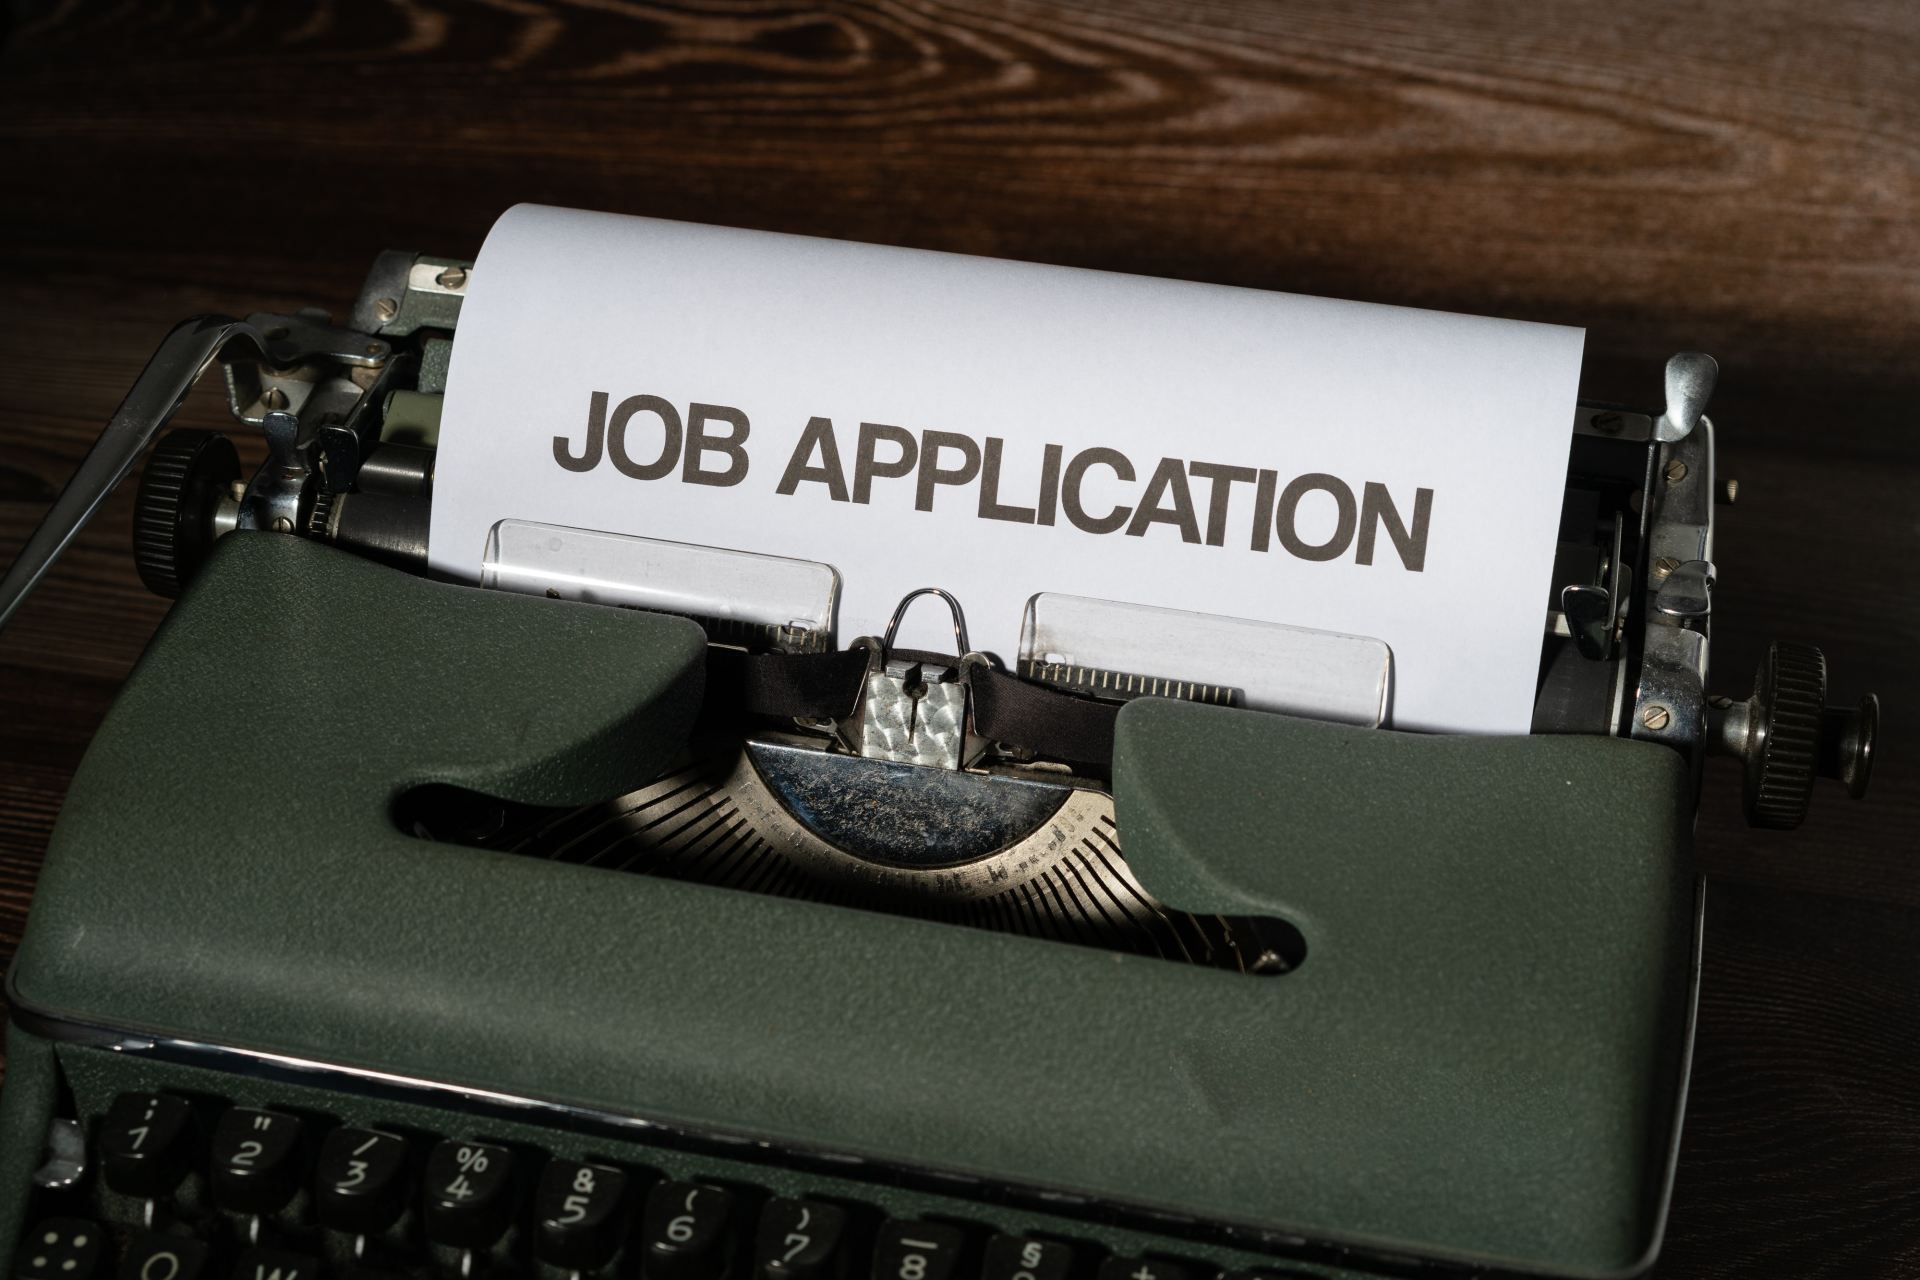 A job application being written on a type writer